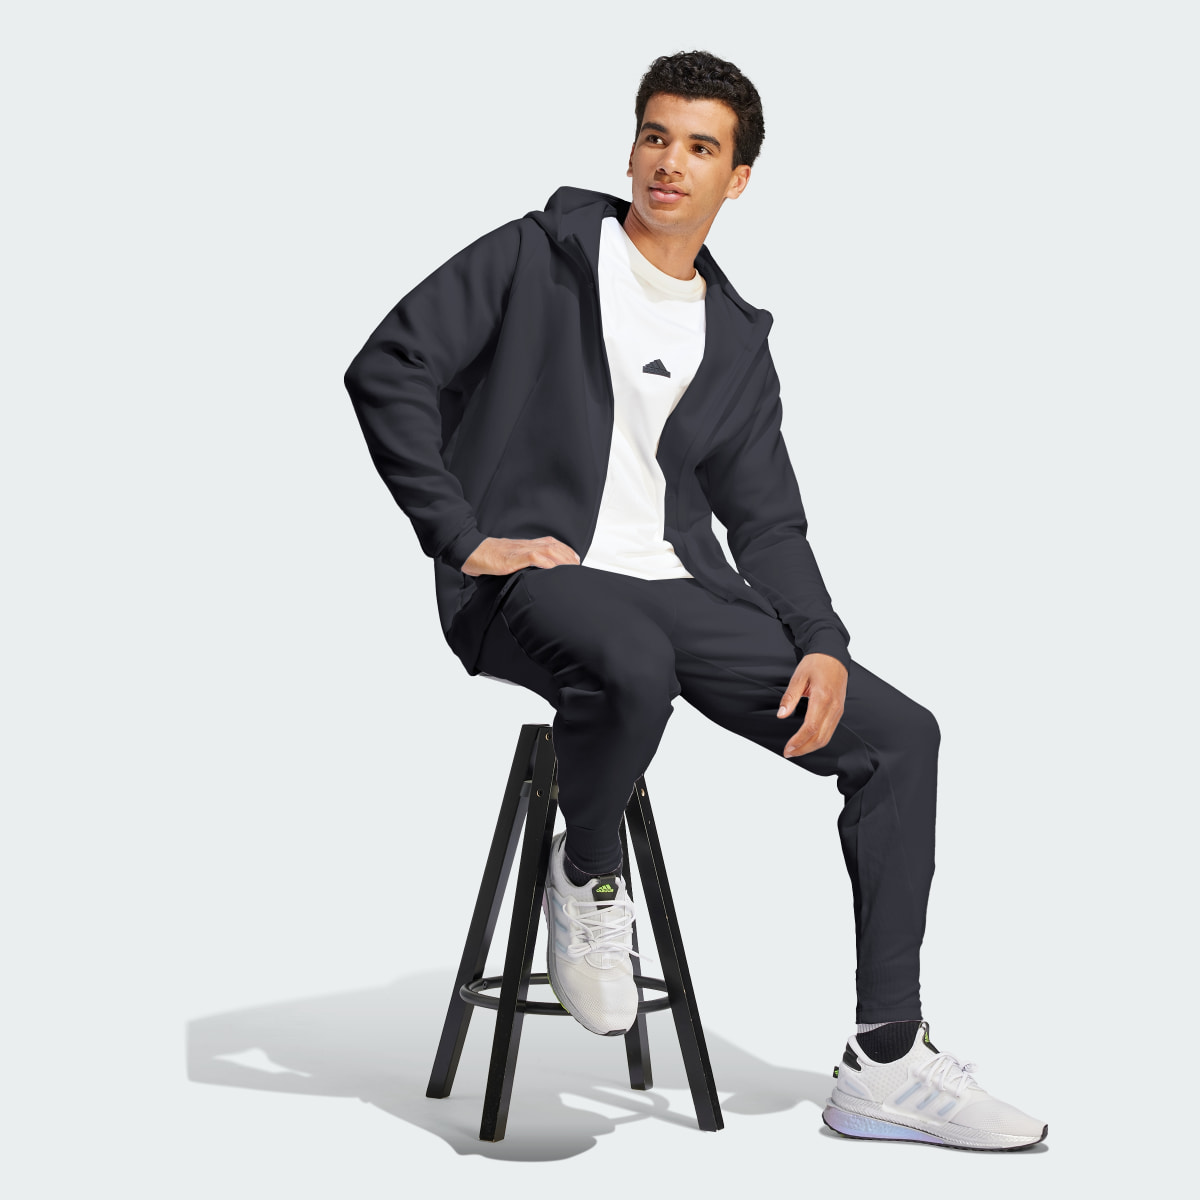 Adidas Bluza dresowa Z.N.E. Premium Full-Zip Hooded. 5